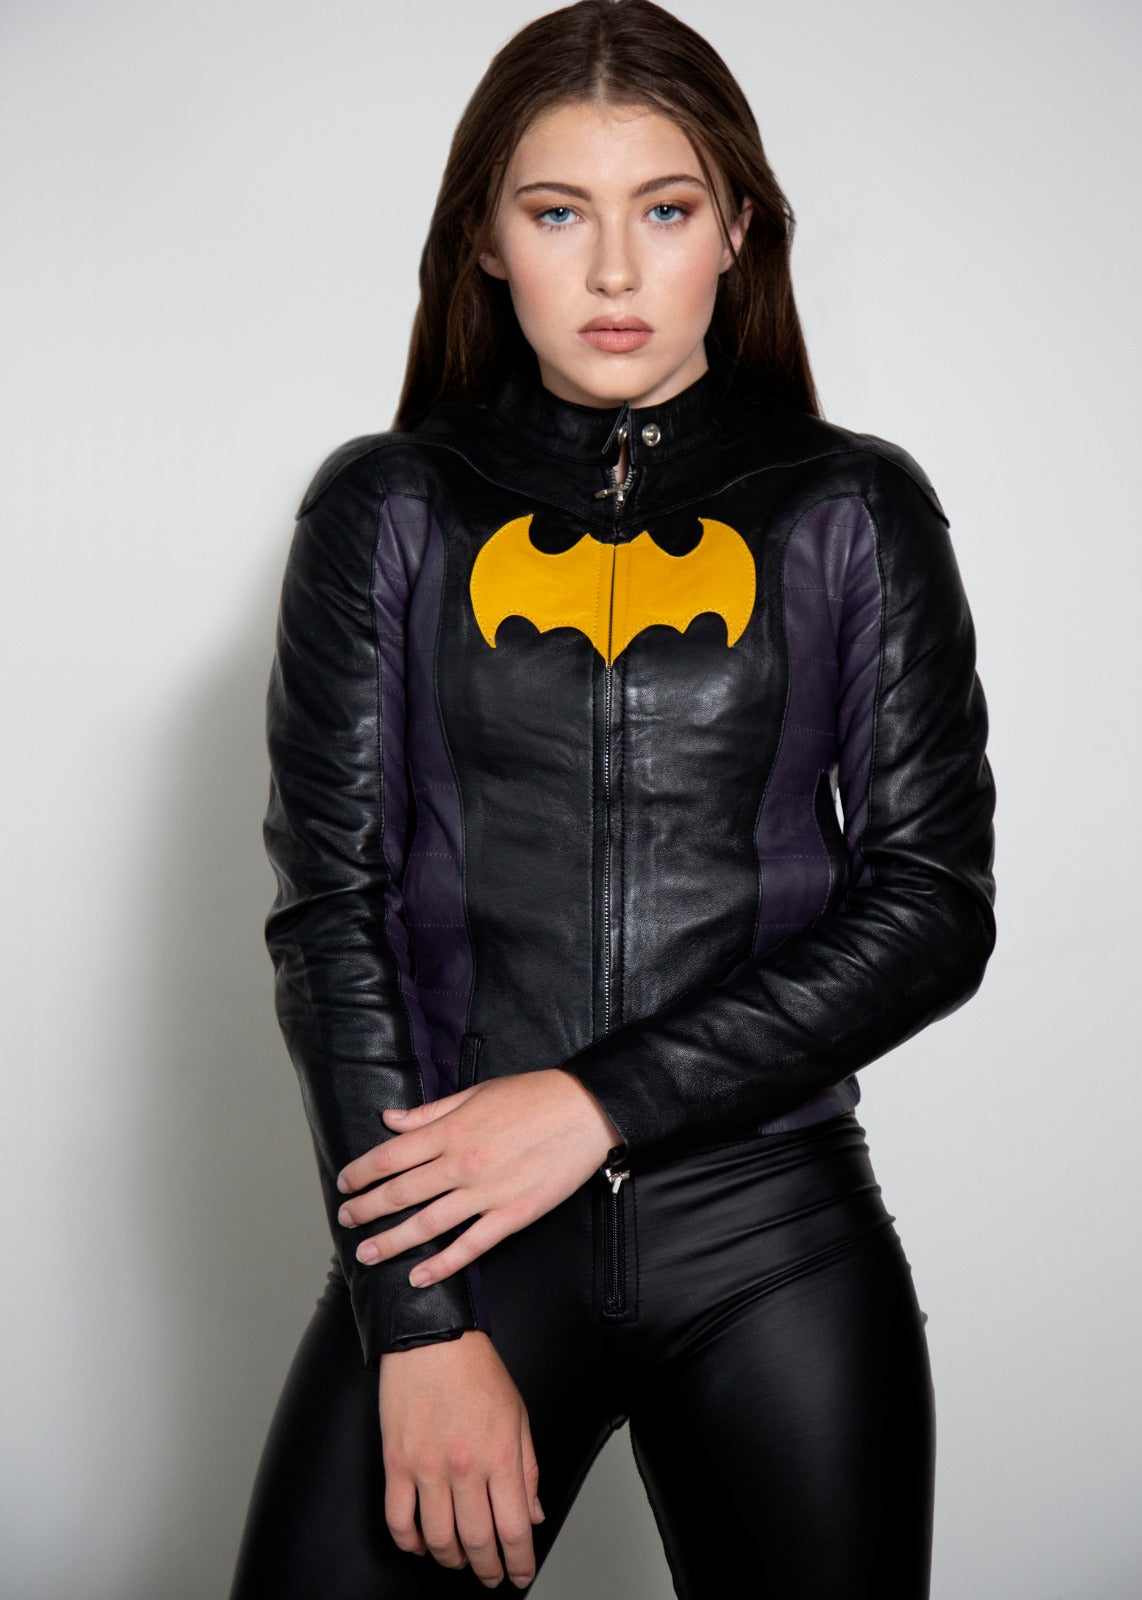 Womens Barbara Batman Black Yellow Bat Leather Jacket